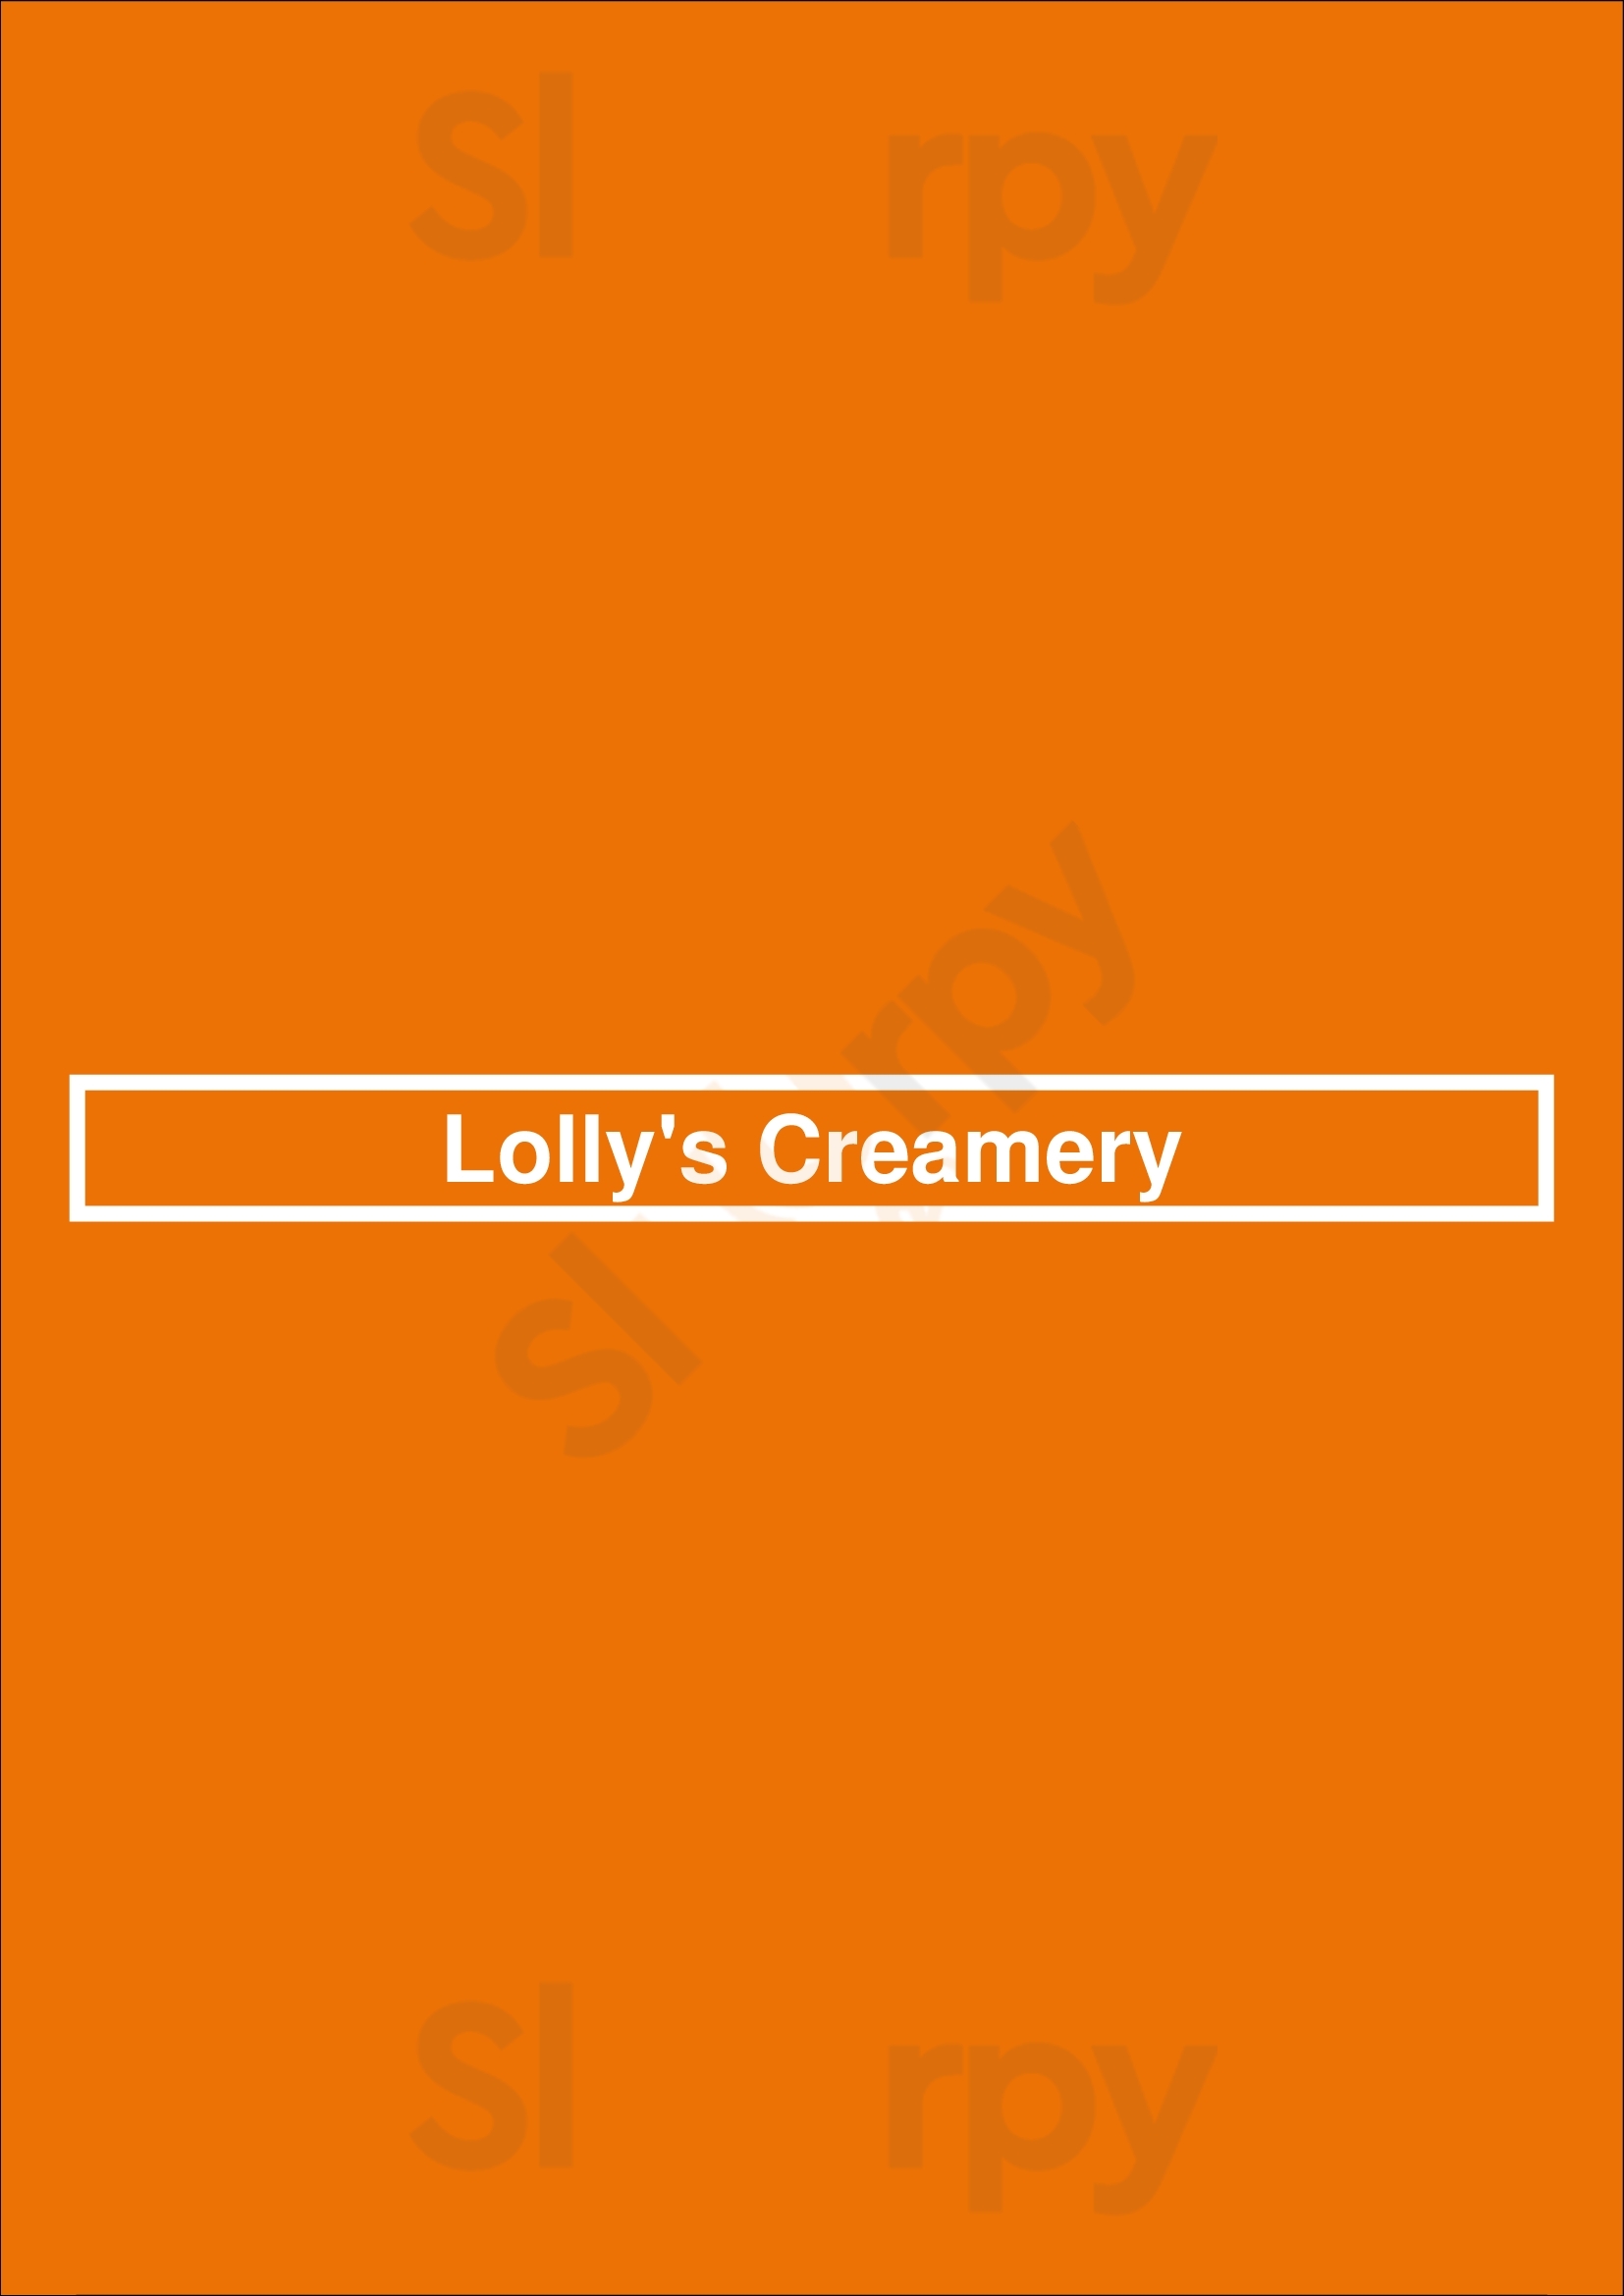 Lolly's Creamery Virginia Beach Menu - 1